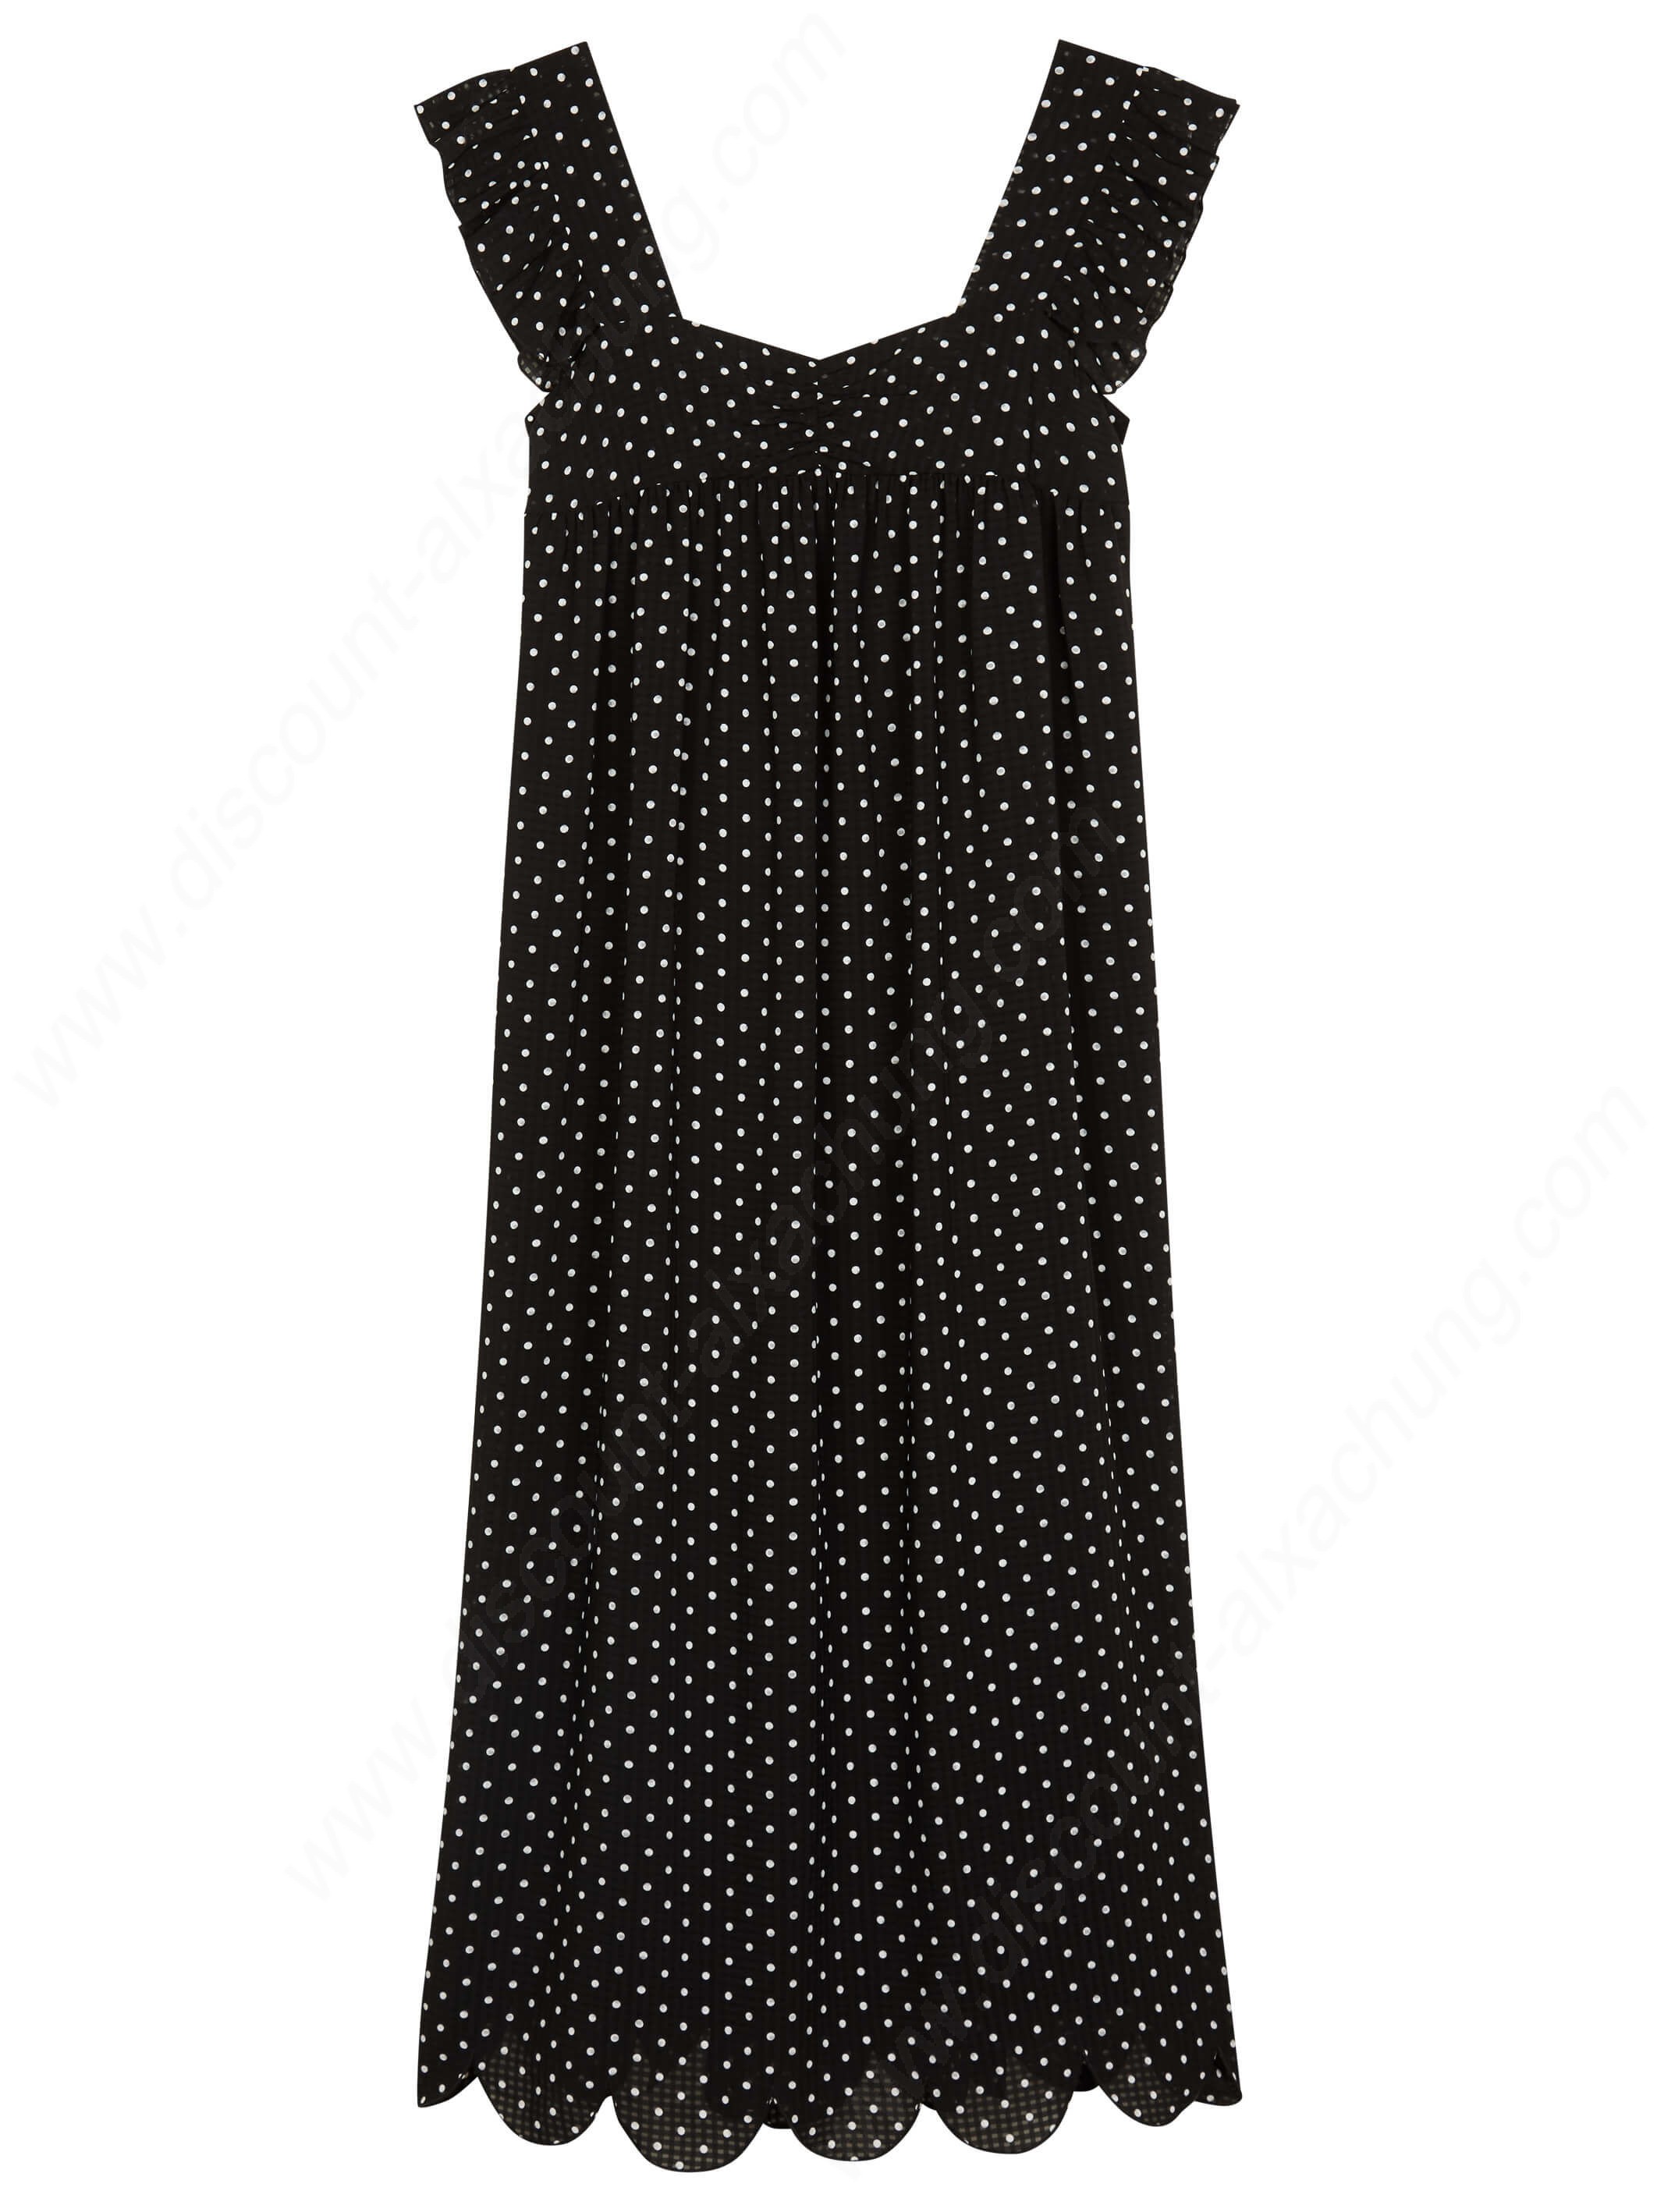 Alexachung Black Fifi Smock Dress - Alexachung Black Fifi Smock Dress